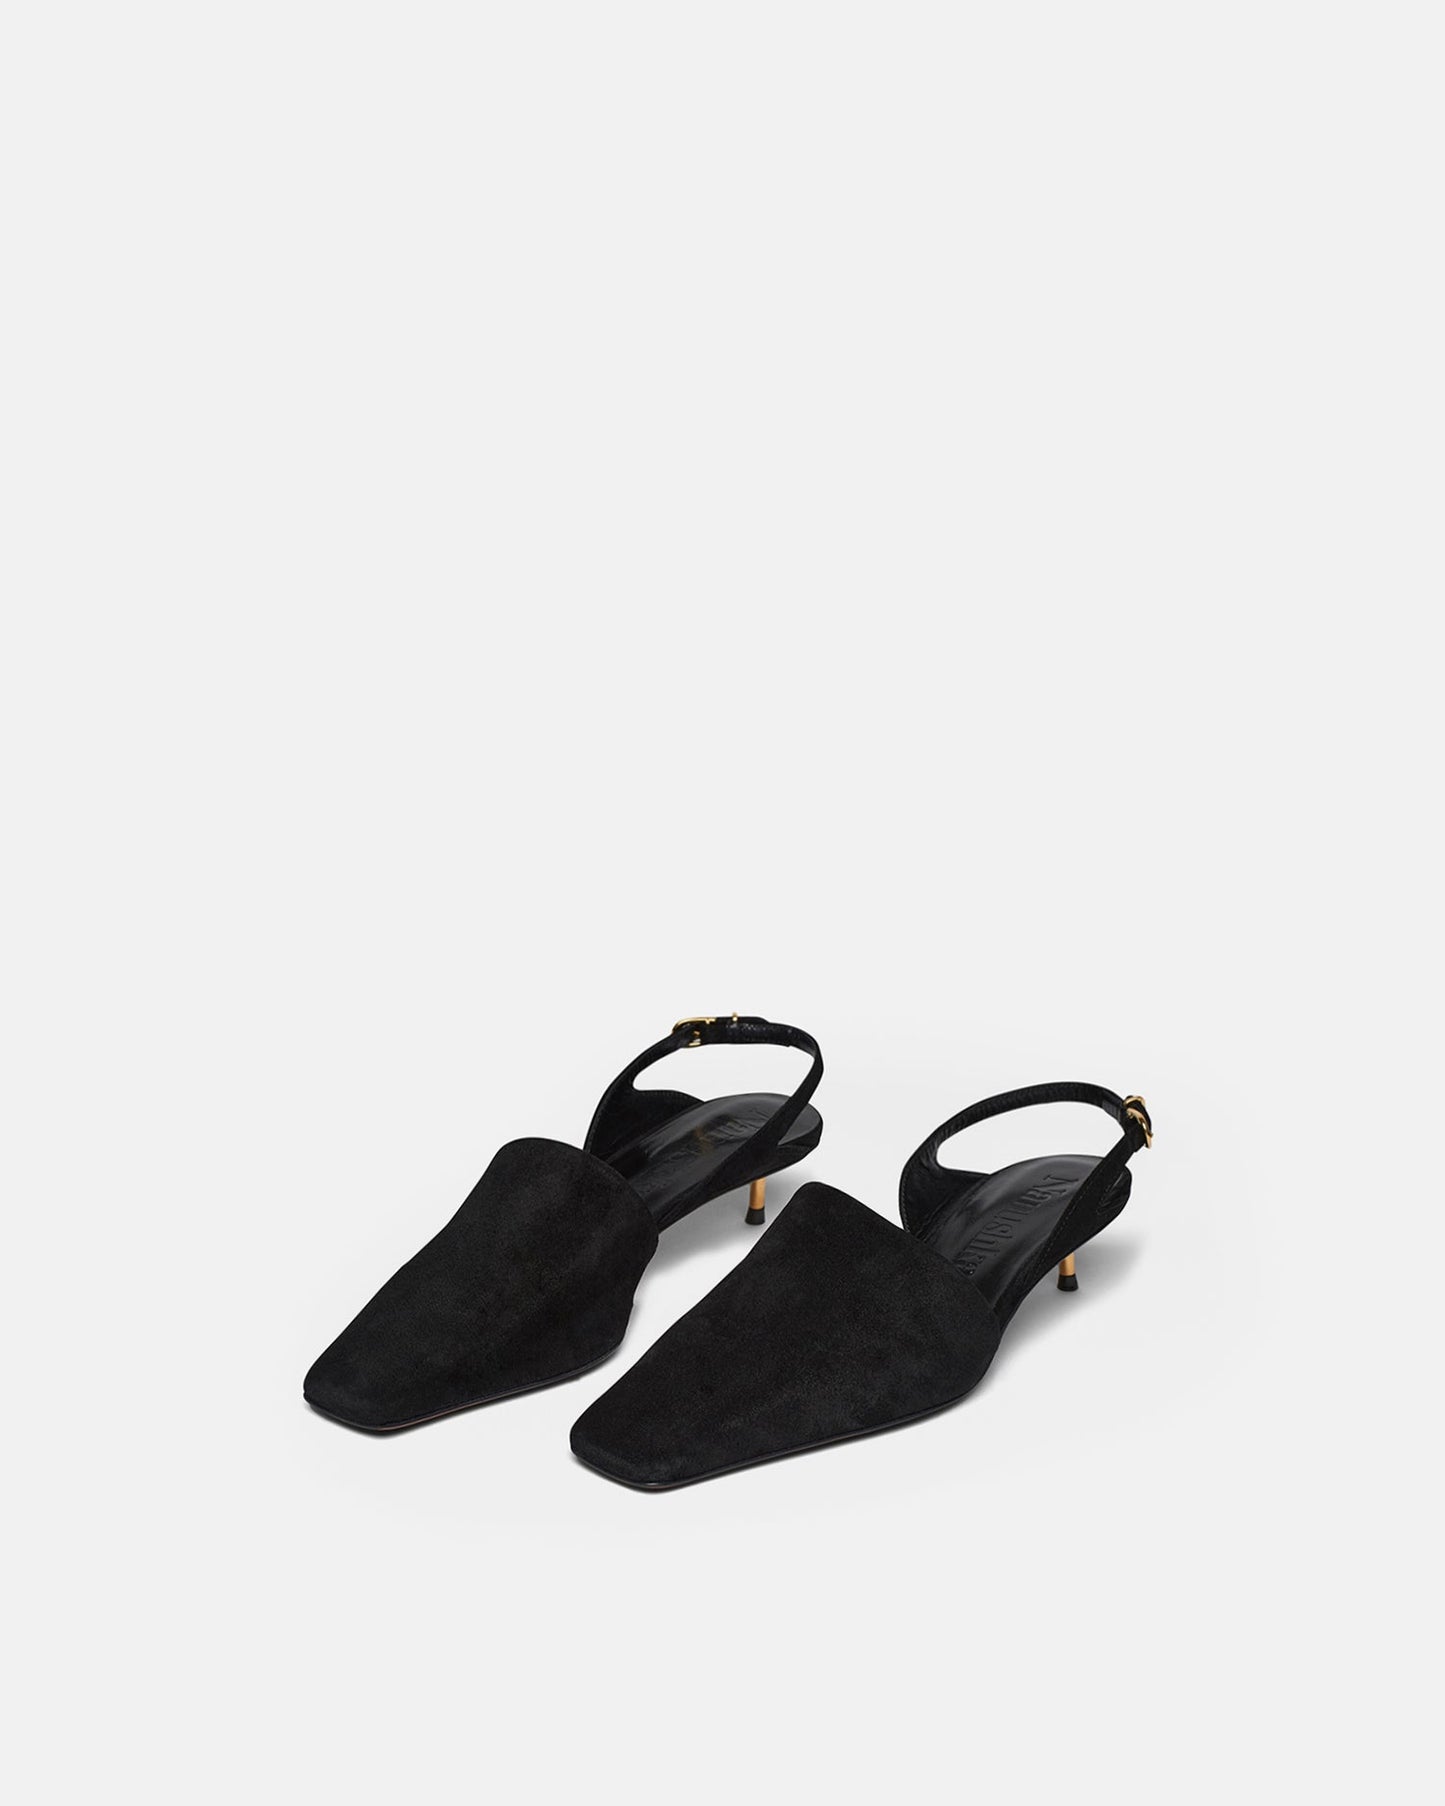 Enaji - Leather Sandals - Black